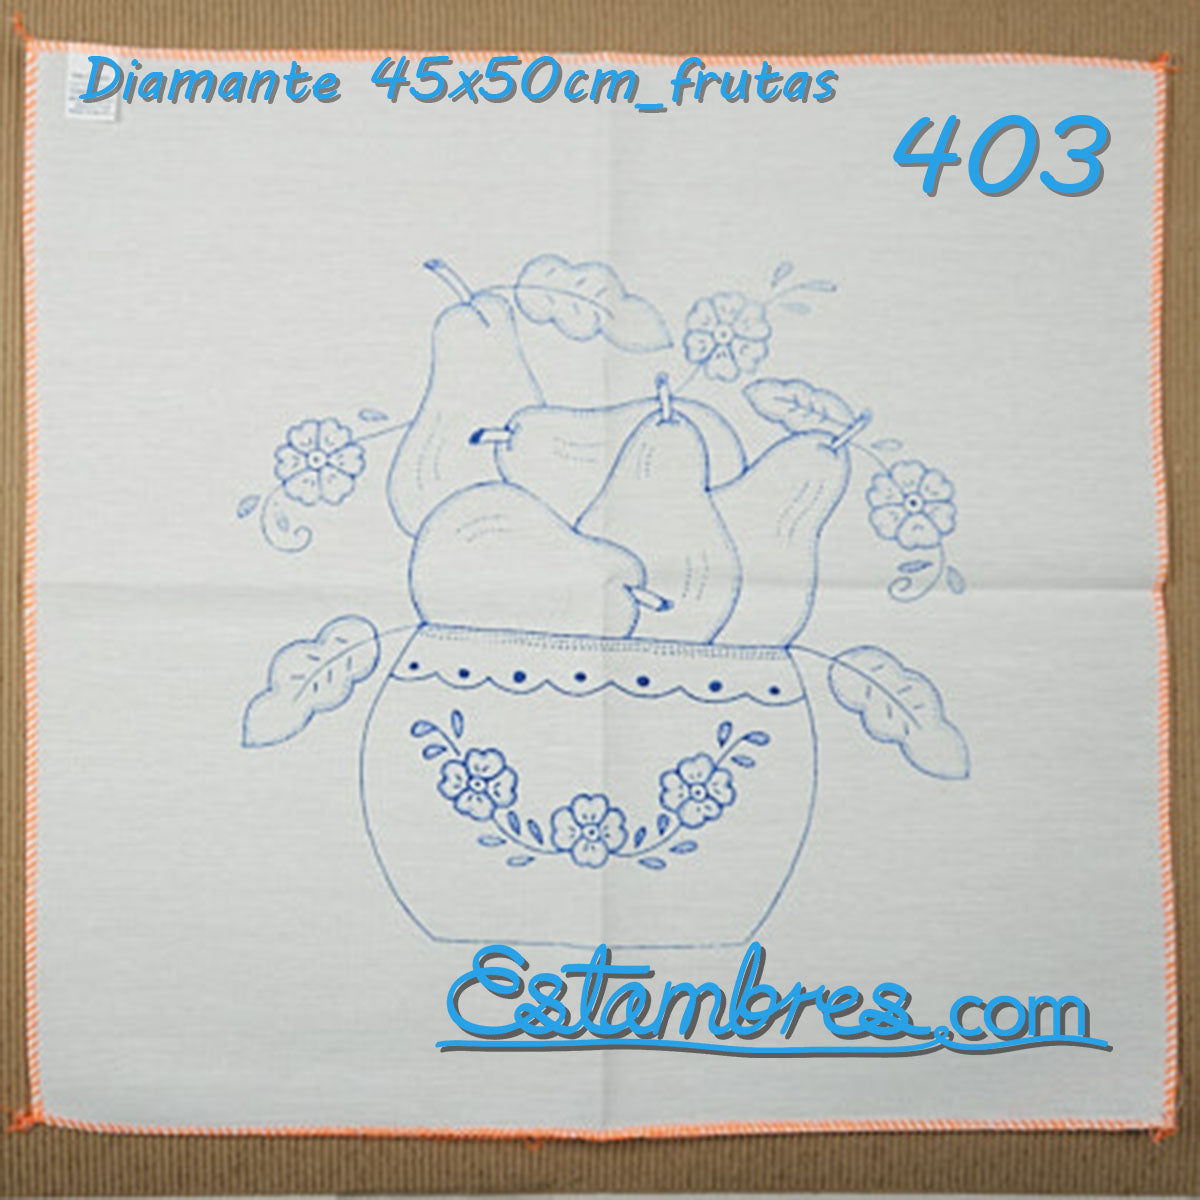 FRUTAS - Diamante [45x50cm]